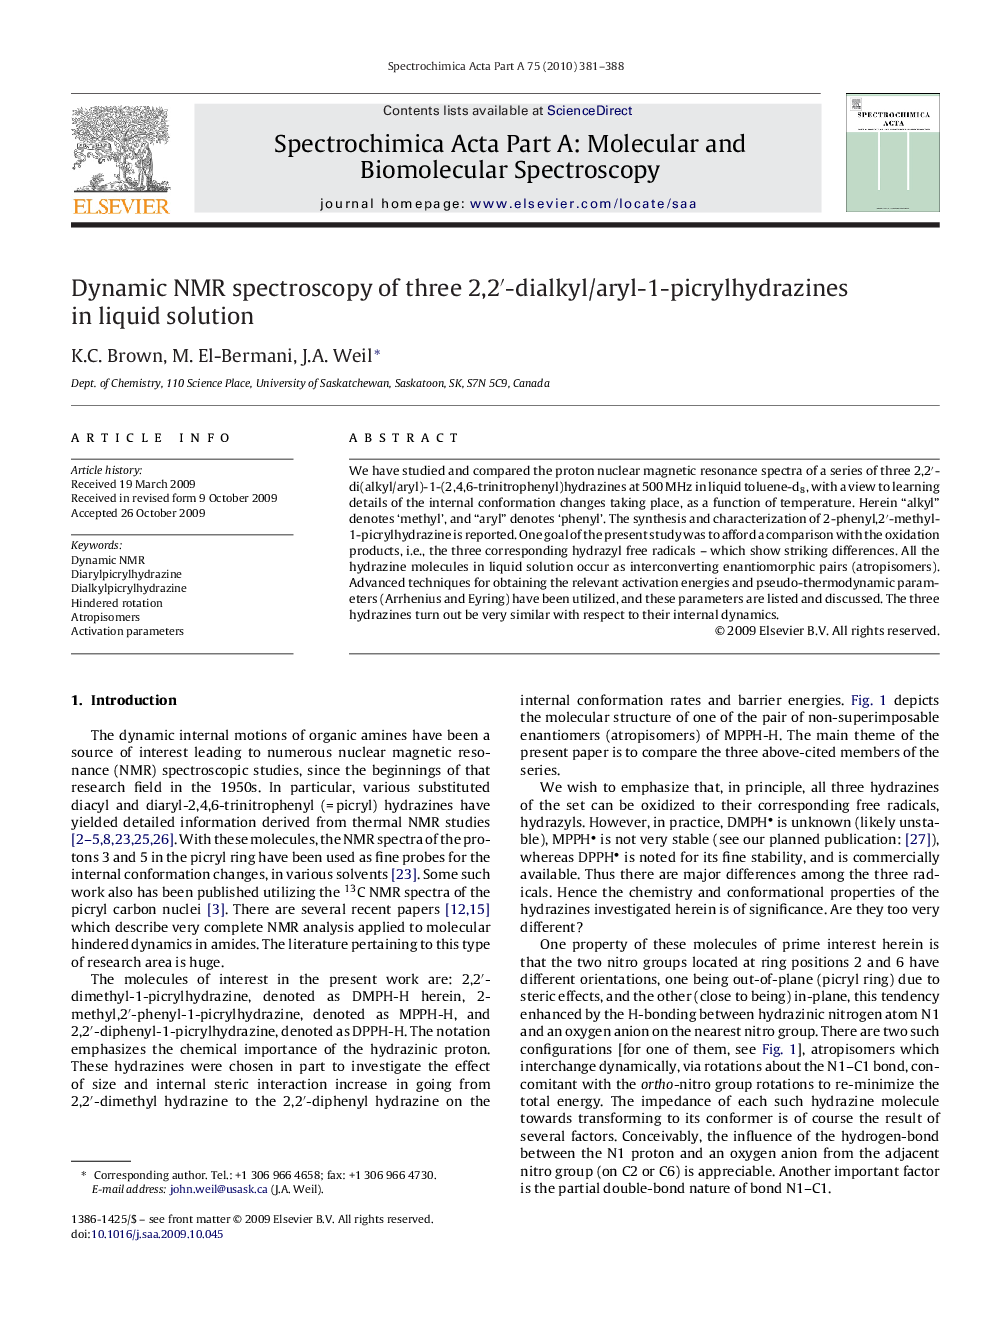 Dynamic NMR spectroscopy of three 2,2′-dialkyl/aryl-1-picrylhydrazines in liquid solution